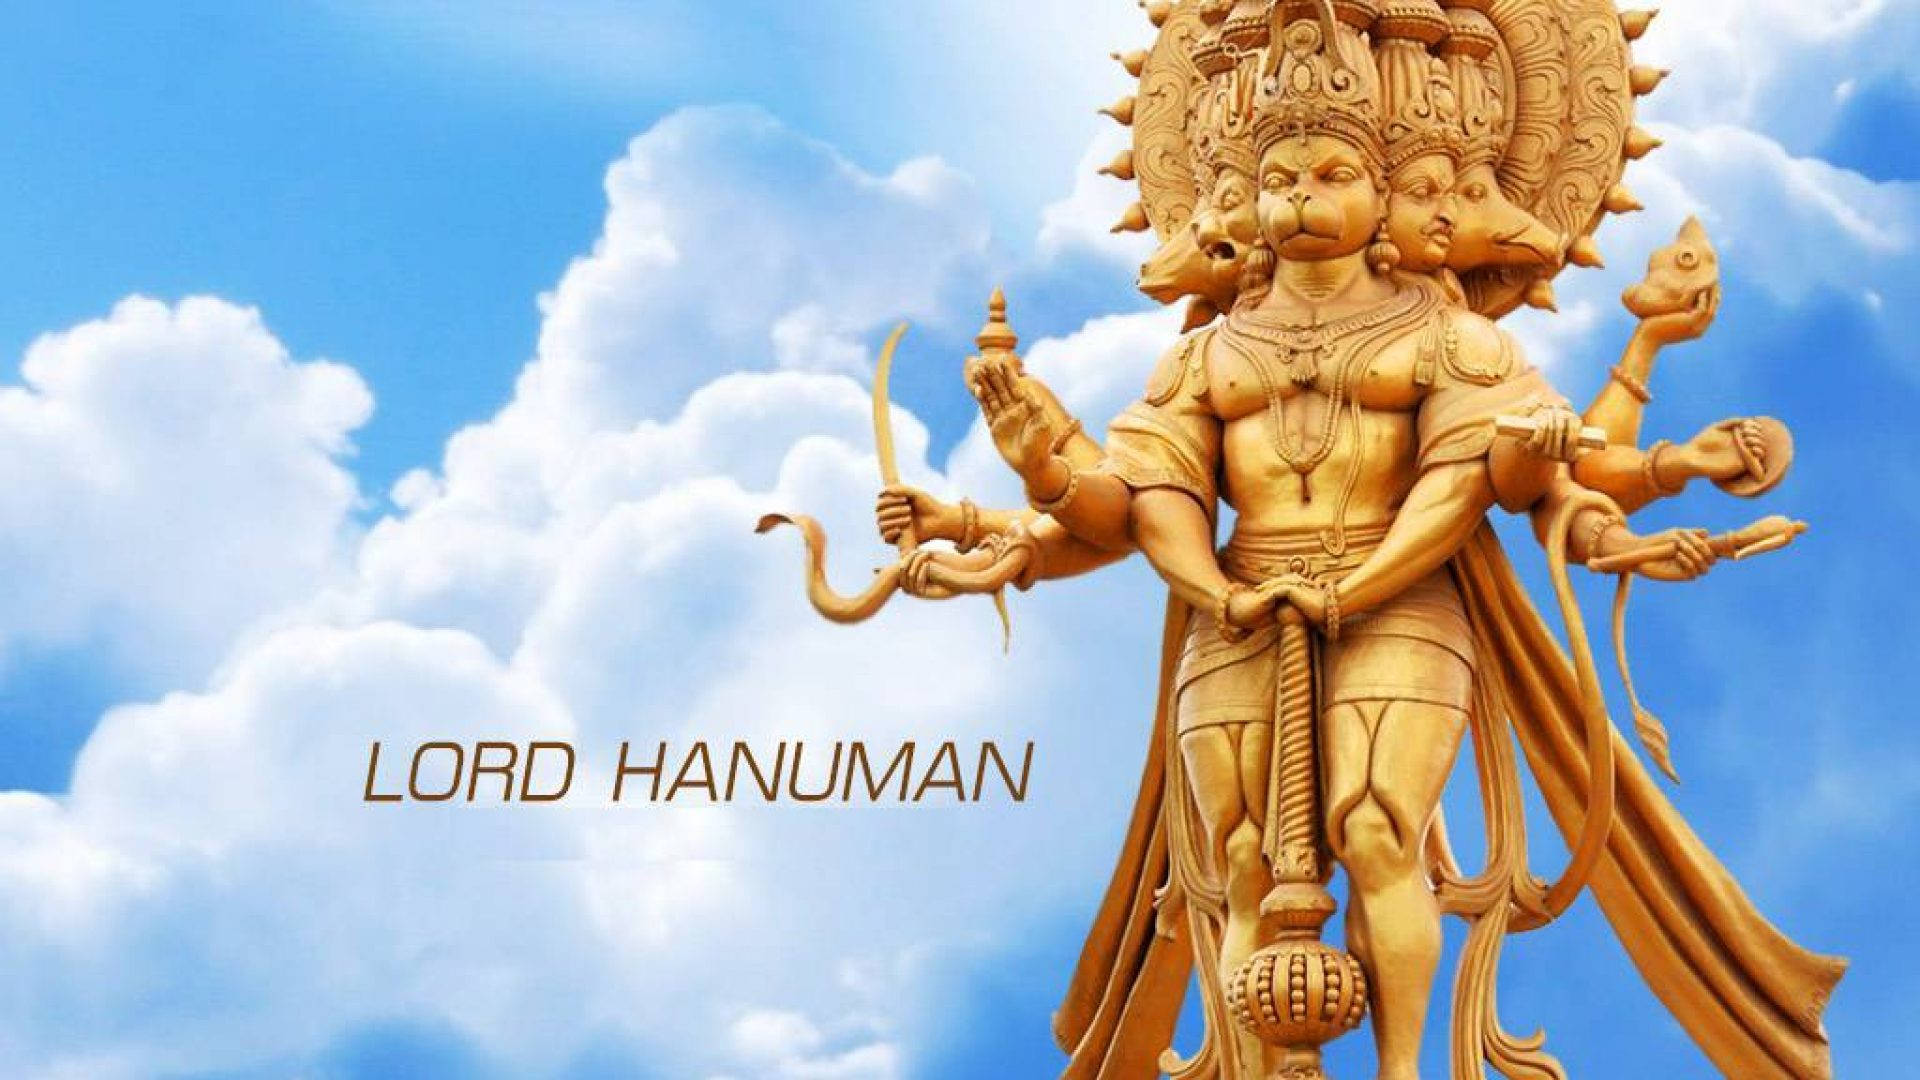 Panchmukhi Hanuman Gold Statue With Clouds